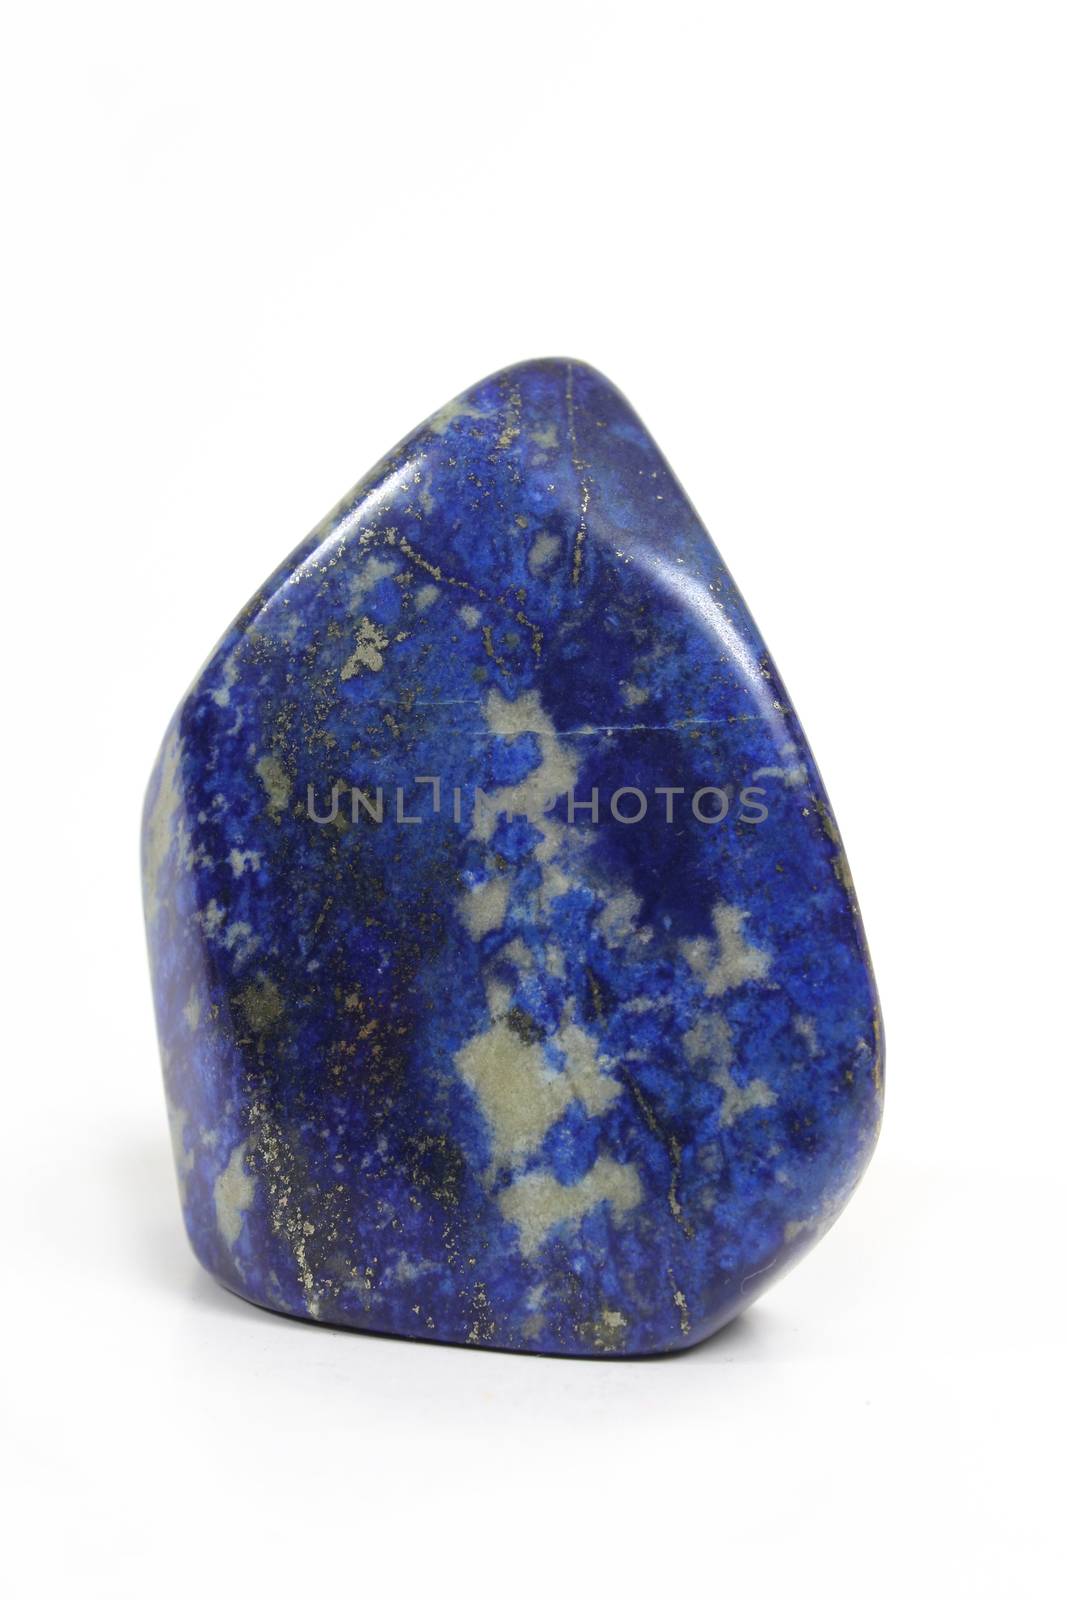 Lapis Lazuli Stone on White Background by Marti157900